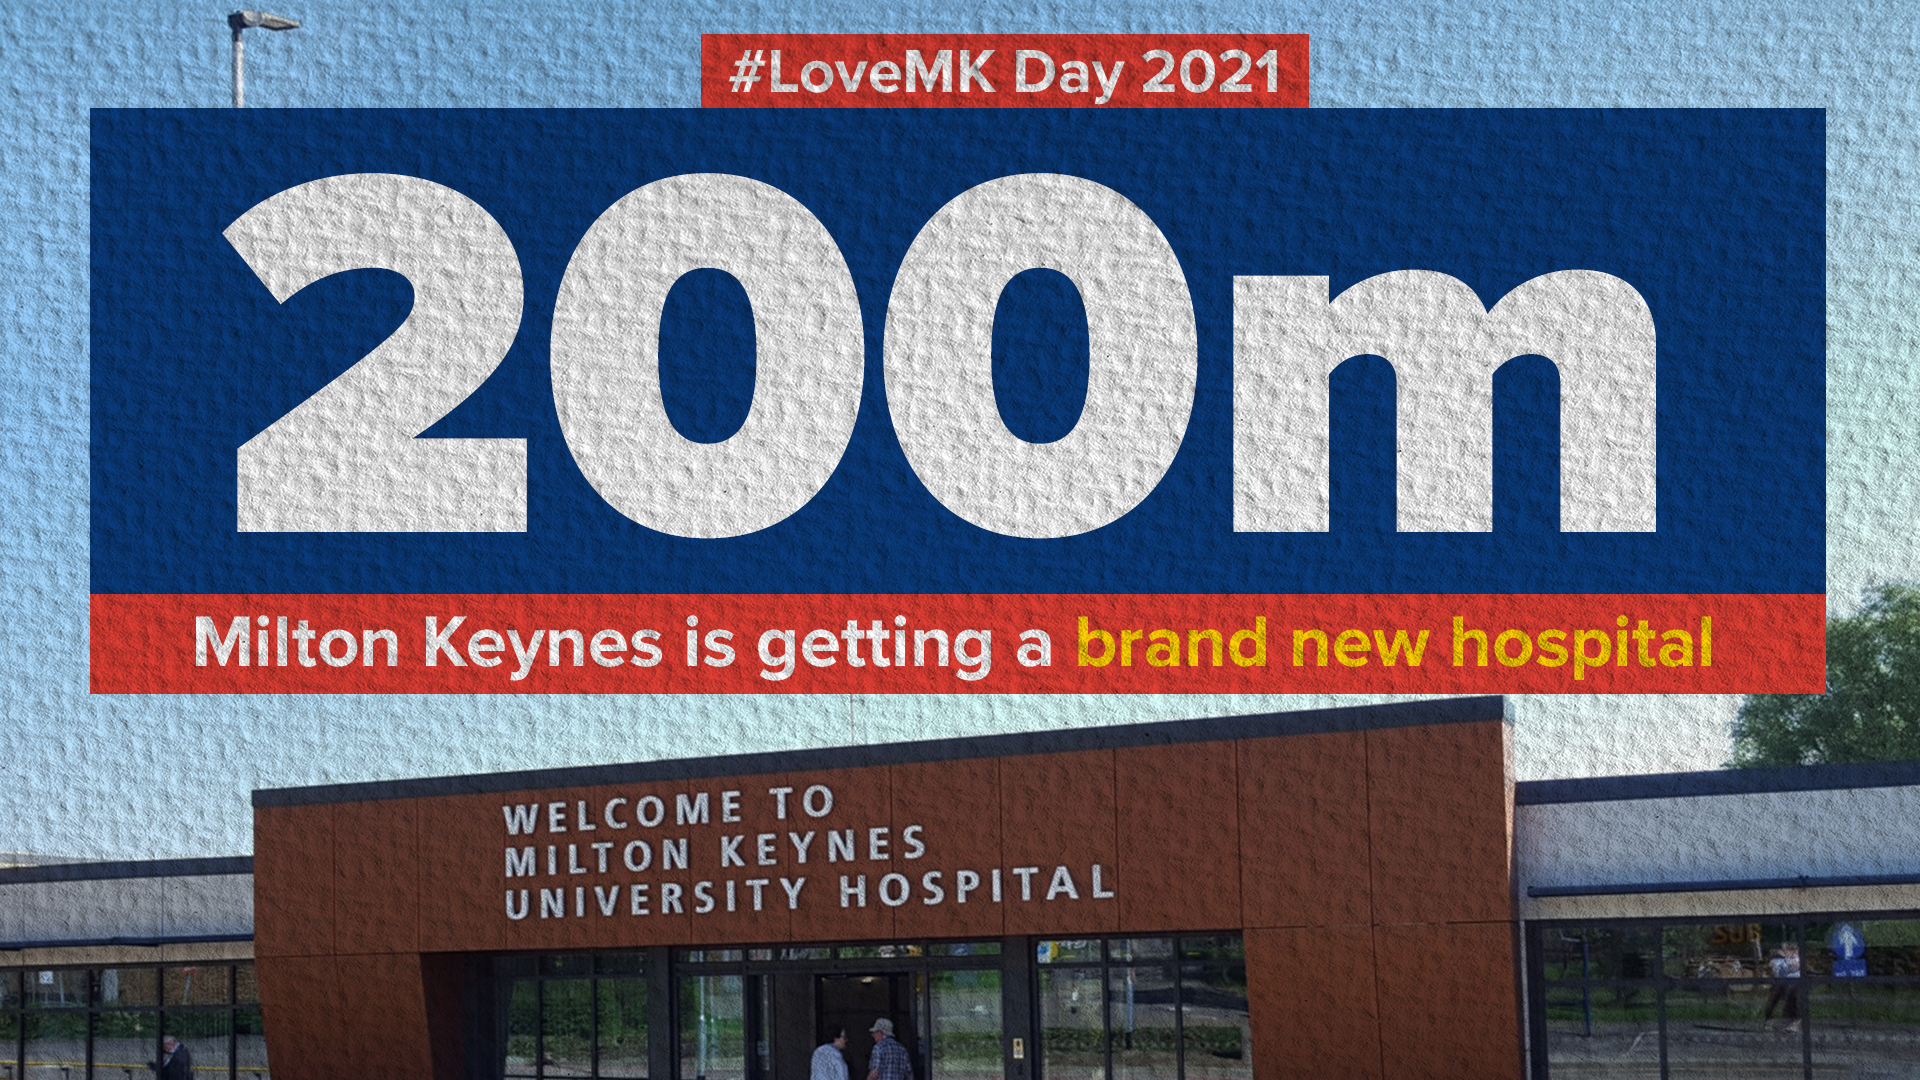 A brand new hospital for Milton Keynes